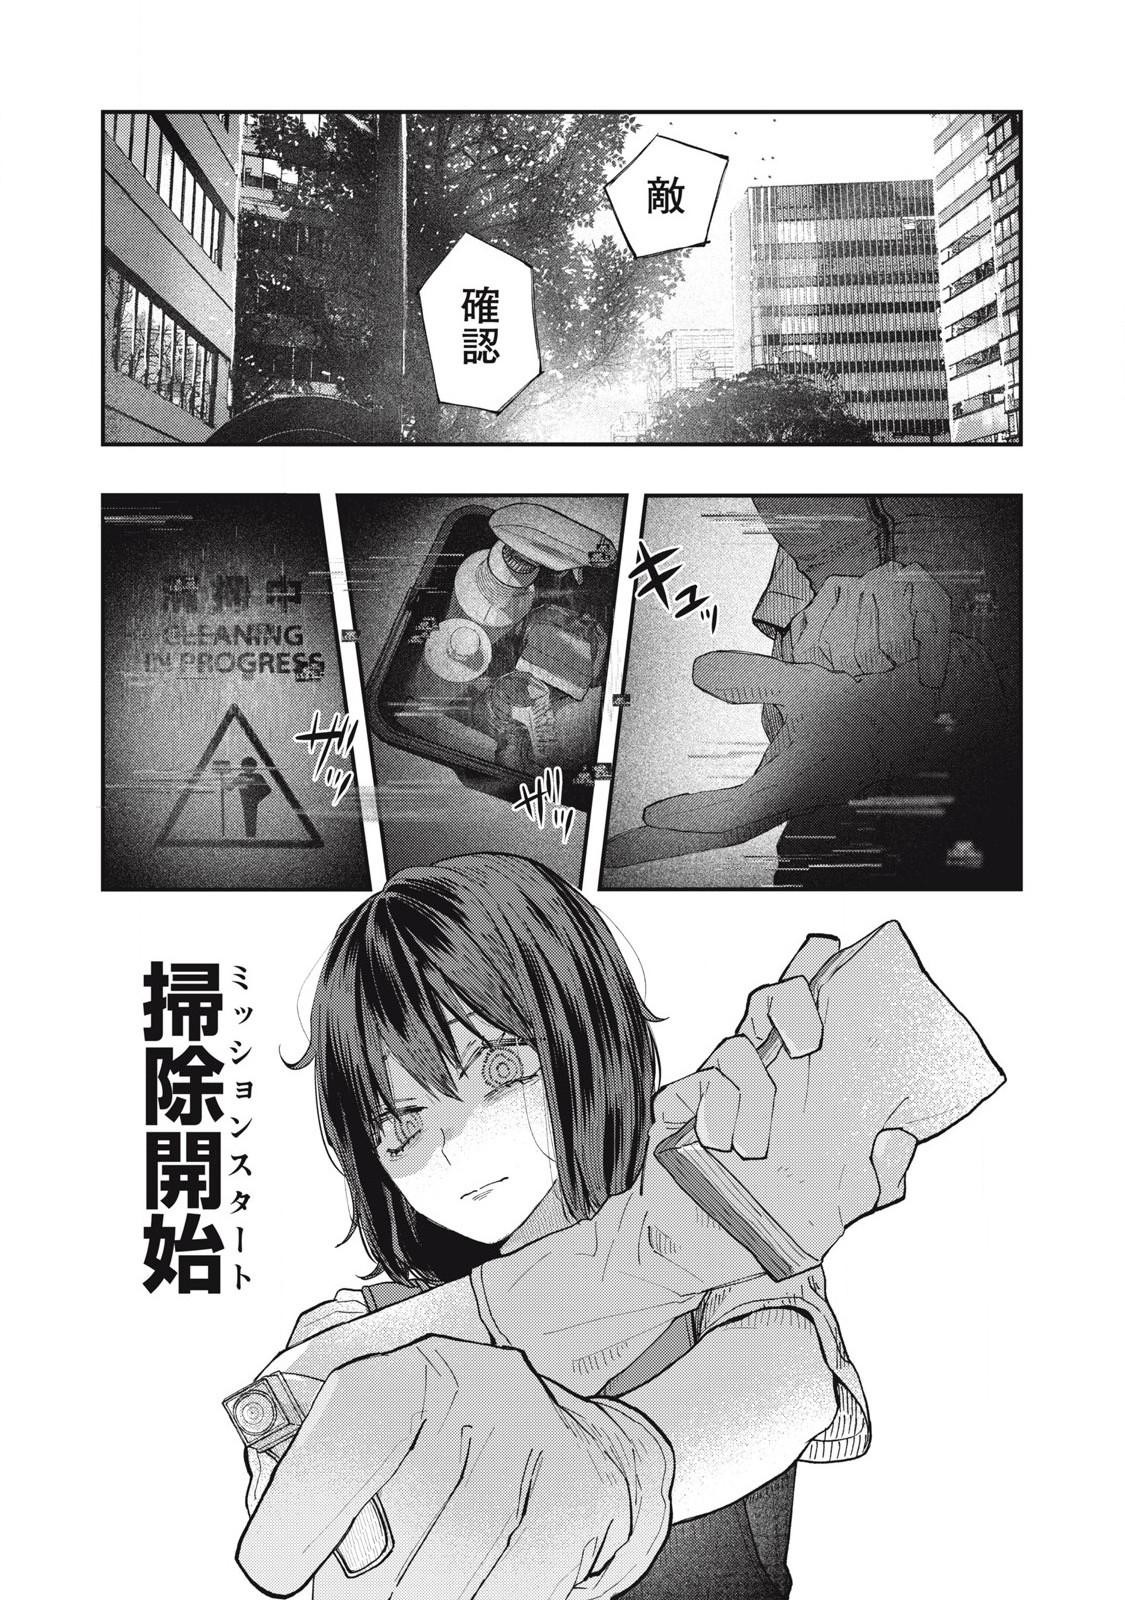 Seisouin Nono-chan Kyou no Tsubuyaki - Chapter 1 - Page 1